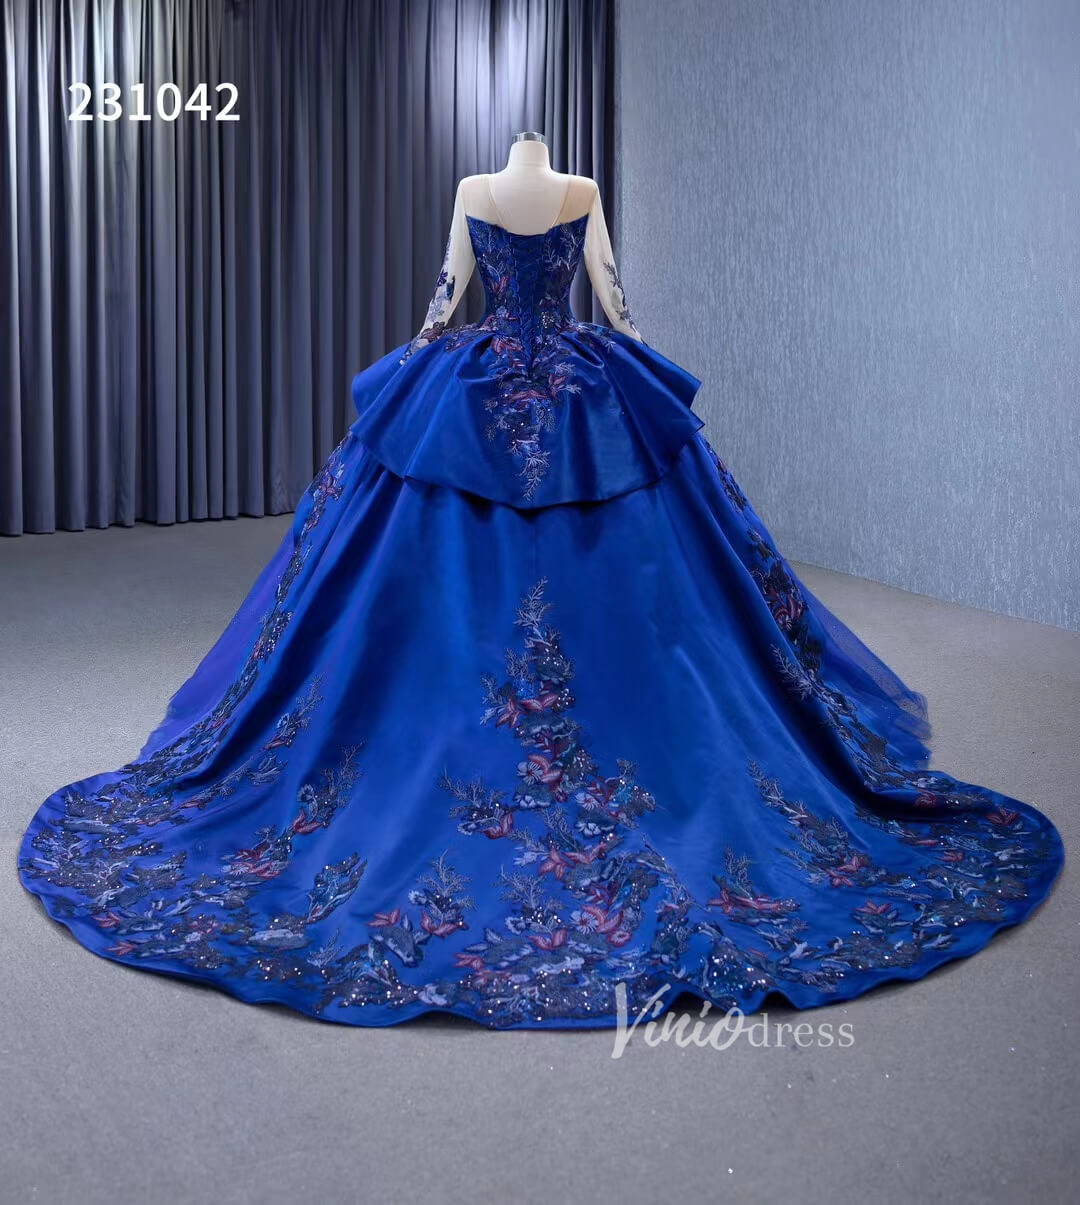 Long Sleeve Blue Ball Gown Wedding Dresses 231042-wedding dresses-Viniodress-Viniodress